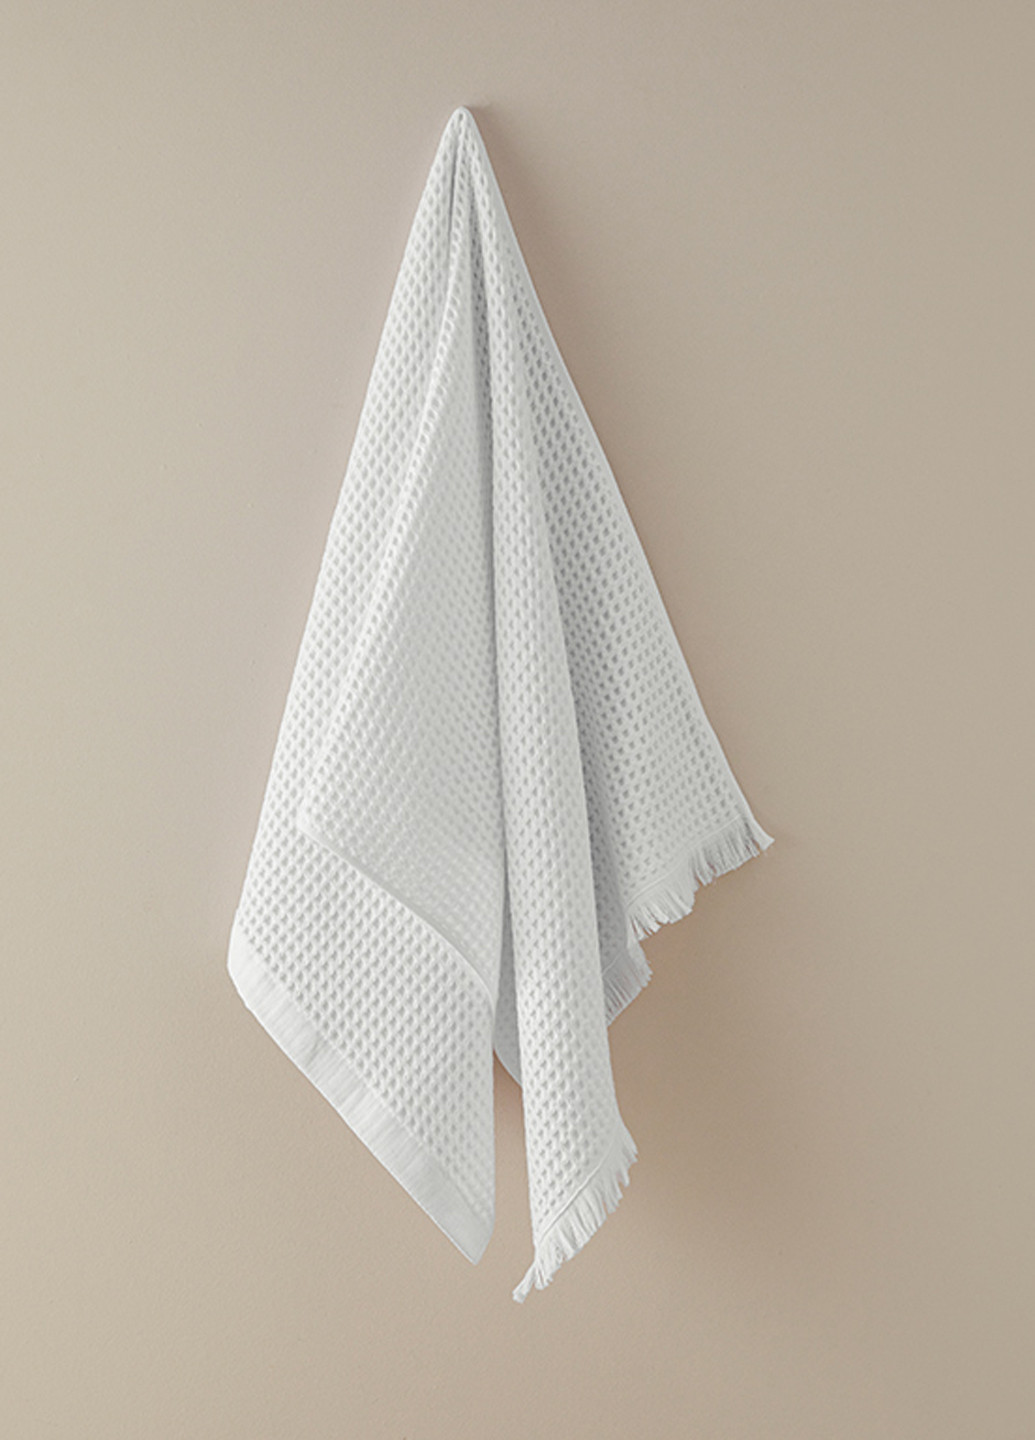 English Home полотенце, 70х140 см однотонный белый производство - Турция